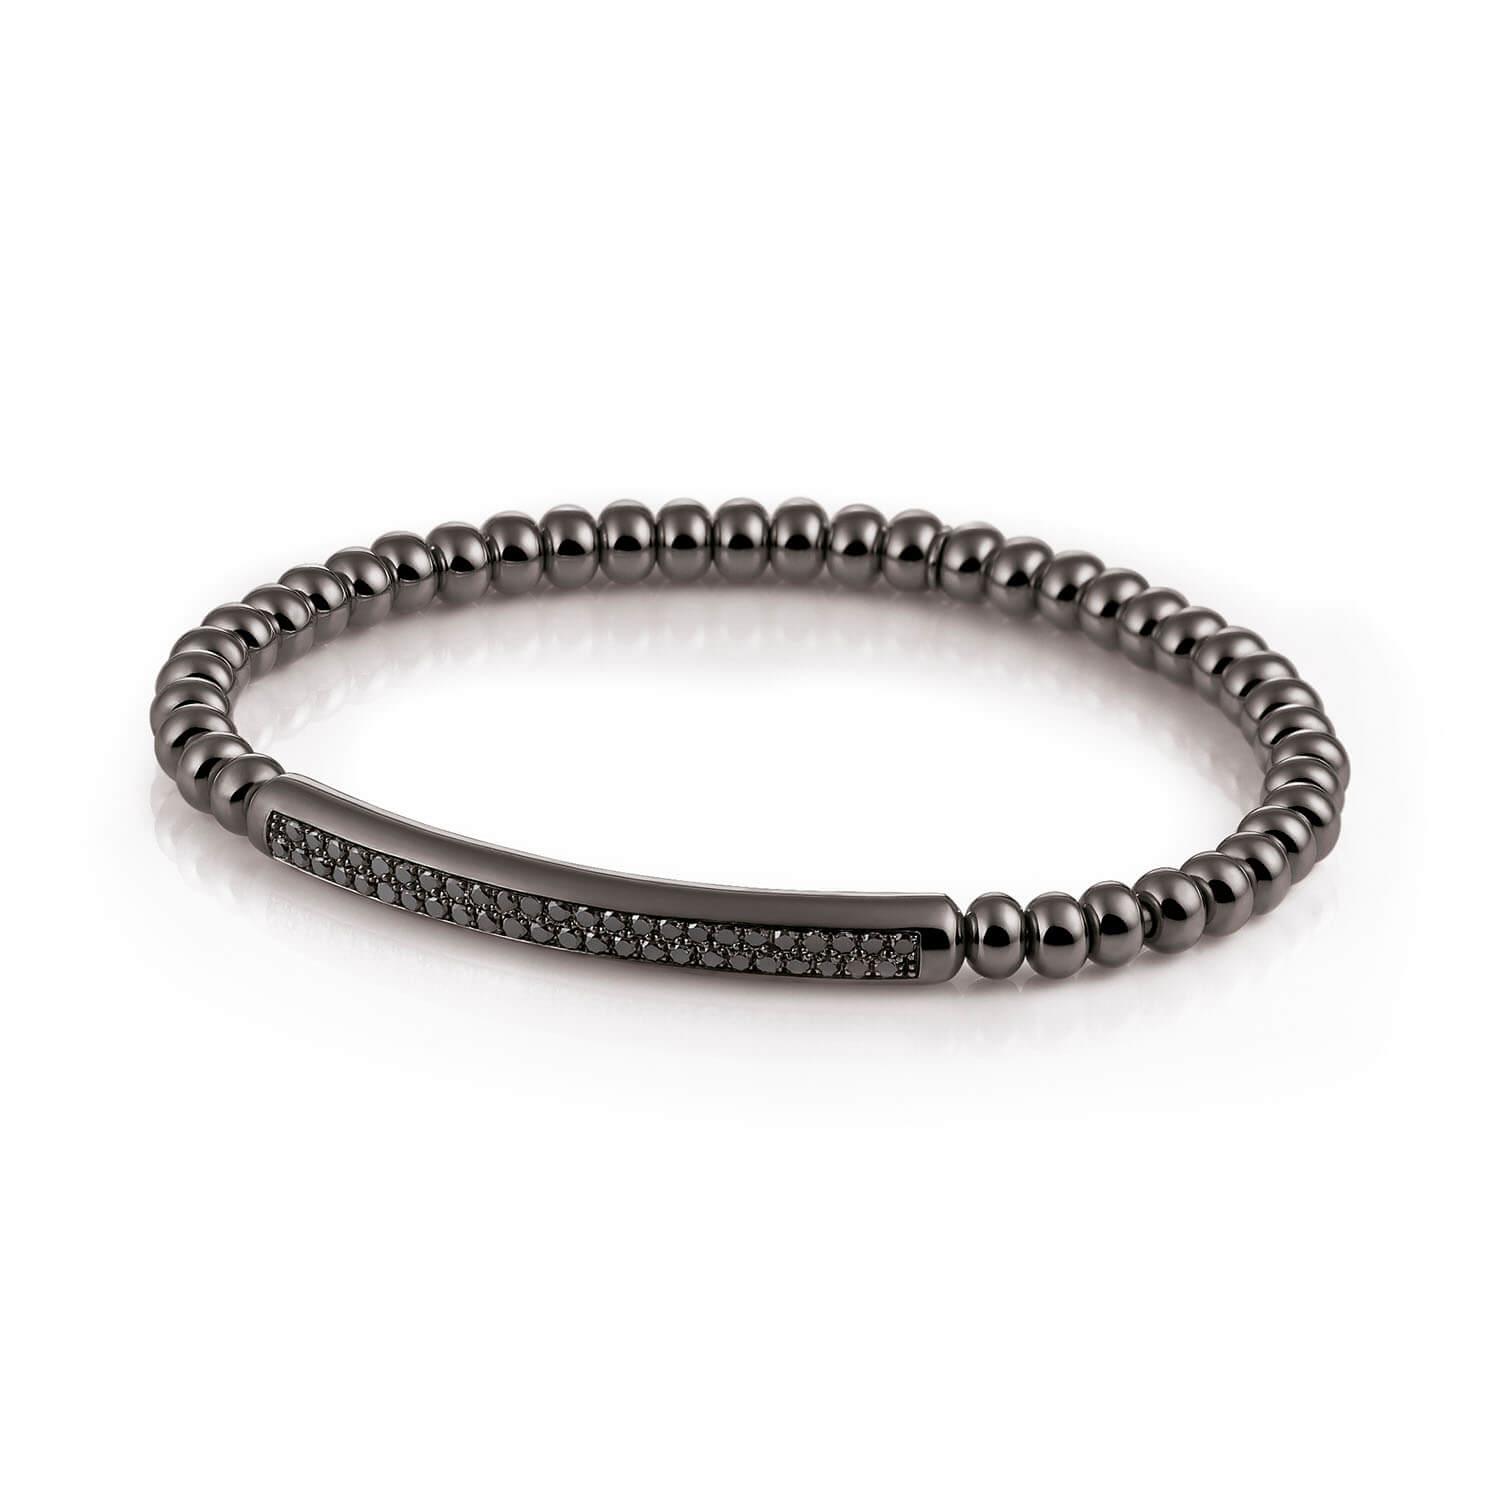 Al Coro Stretchy Men's Bracelet with Double Black Sapphires - Orsini Jewellers NZ